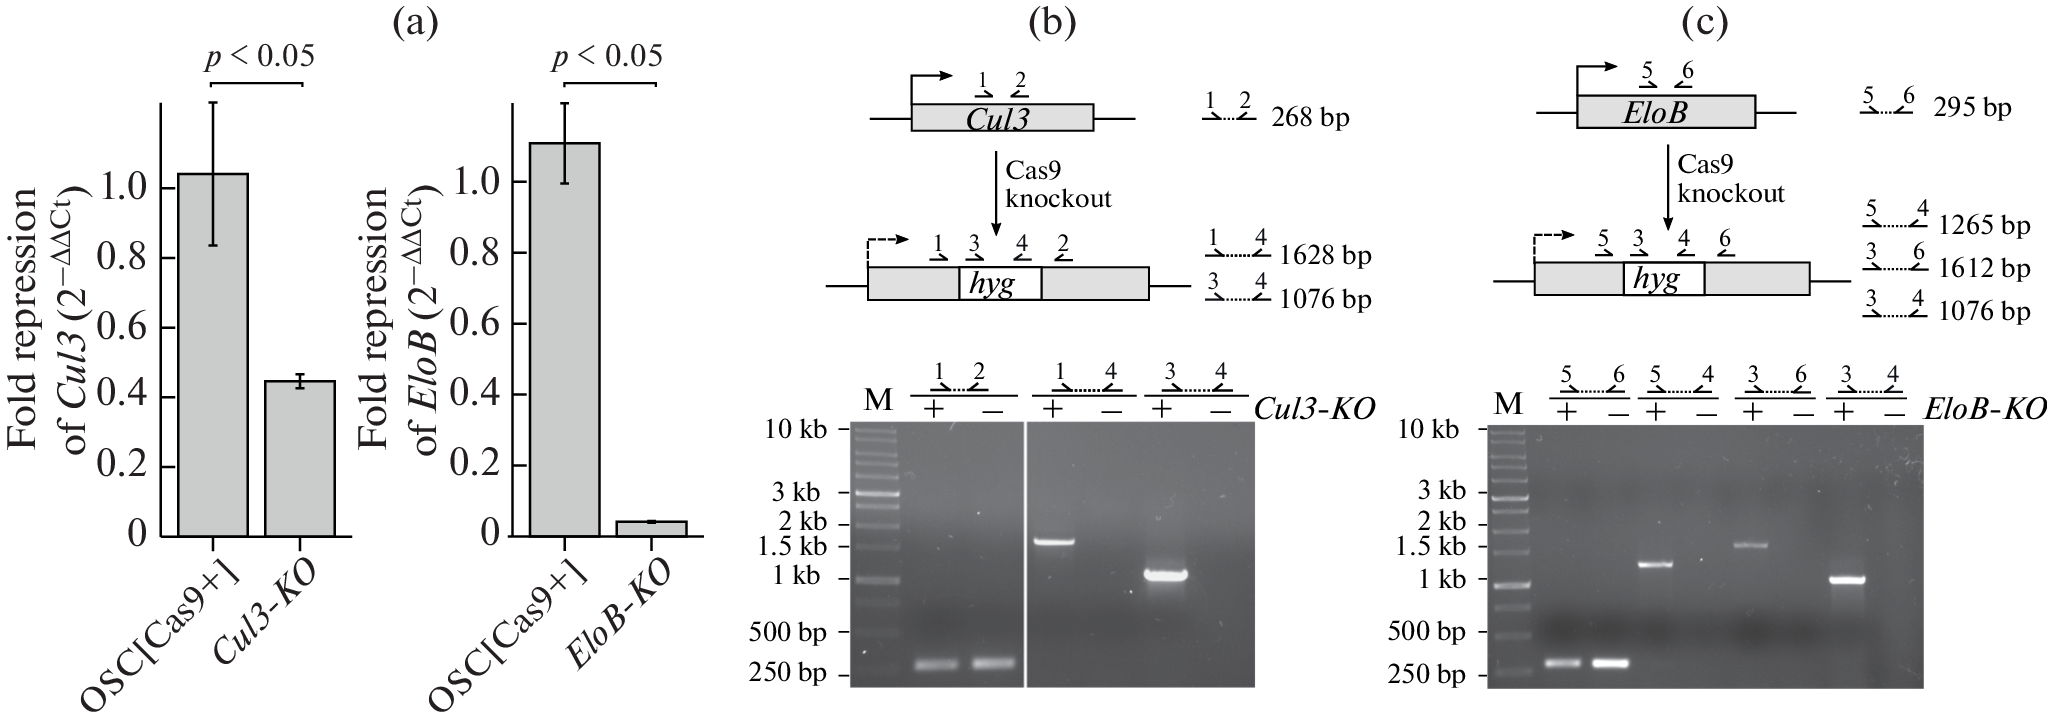 Method of Inducible Knockdown of Essential Genes in OSC Cell Culture of Drosophila melanogaster